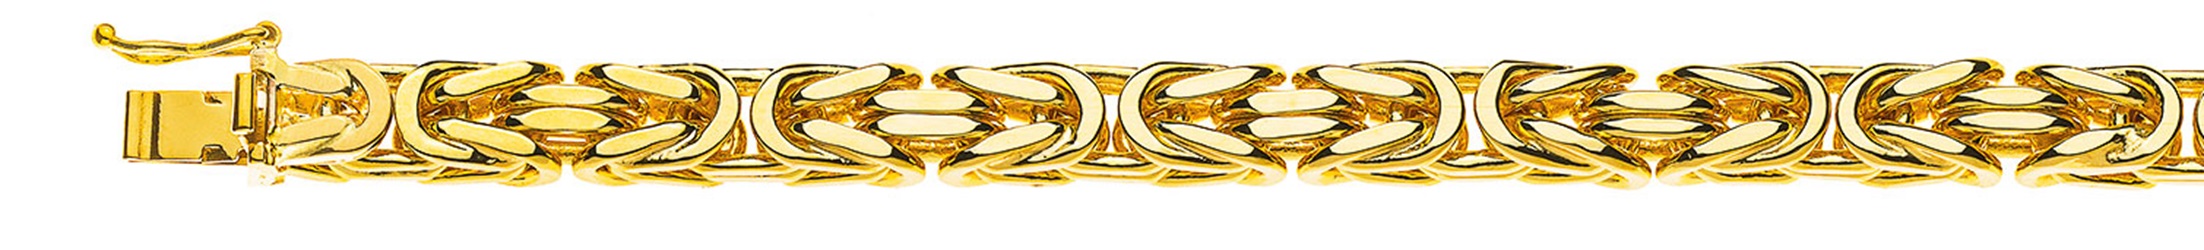 AURONOS Prestige Bracelet 18k yellow gold king chain 5mm 19cm 